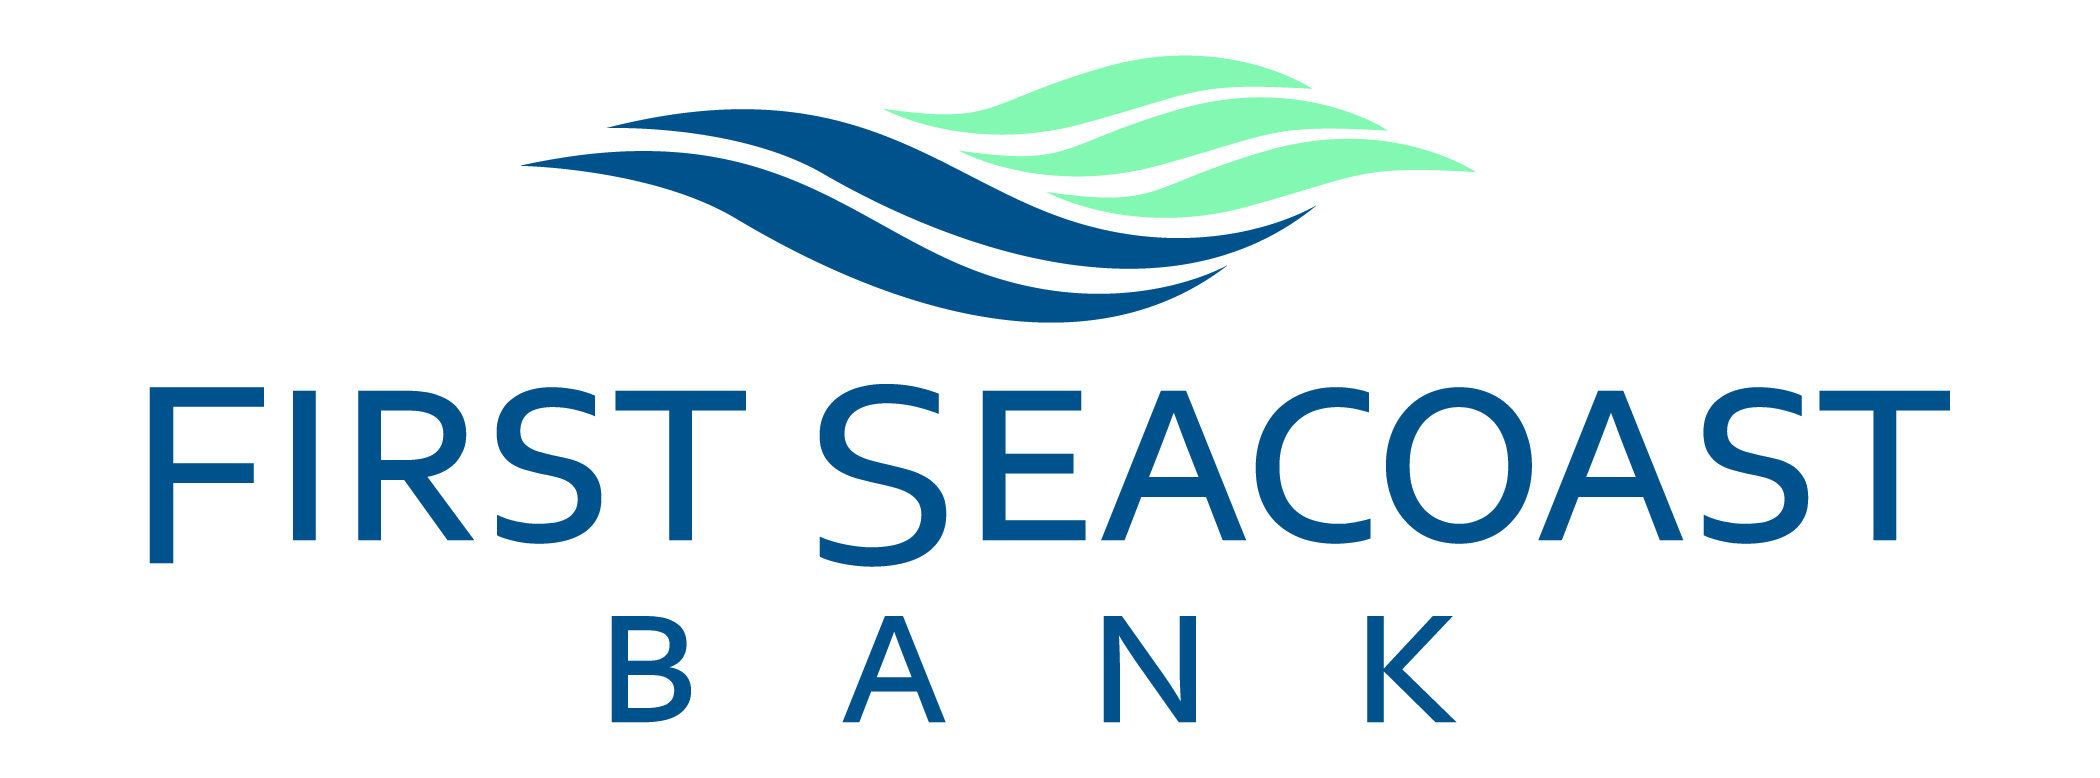 FirstSeacoastBank_logo_Hor_CMYK